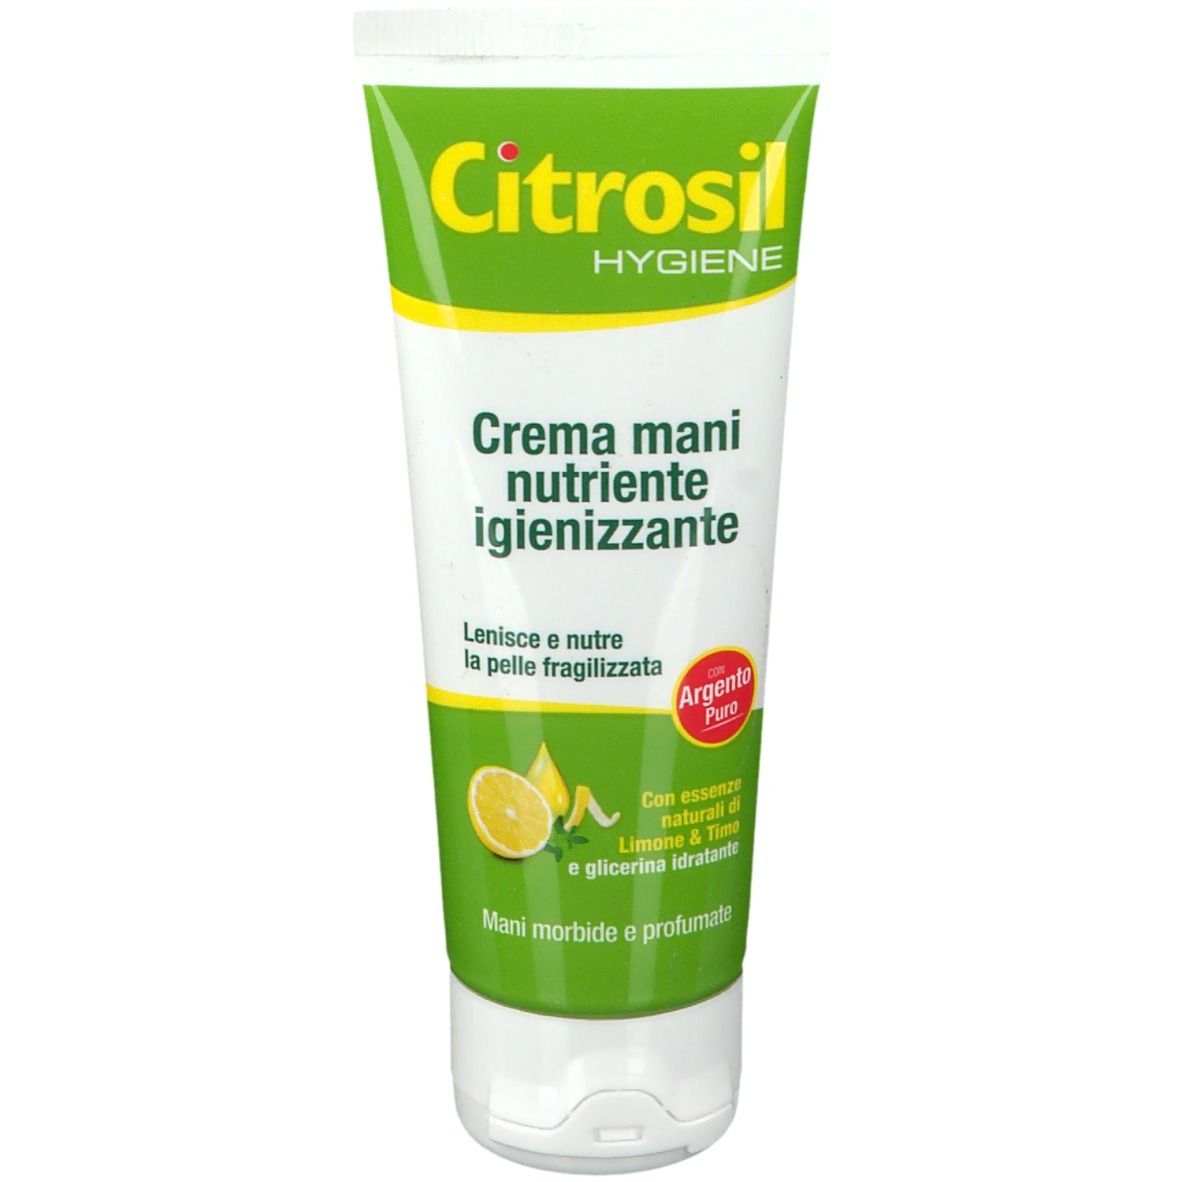 Citrosil HYGIENE Crema Mani Nutriente Igienizzante